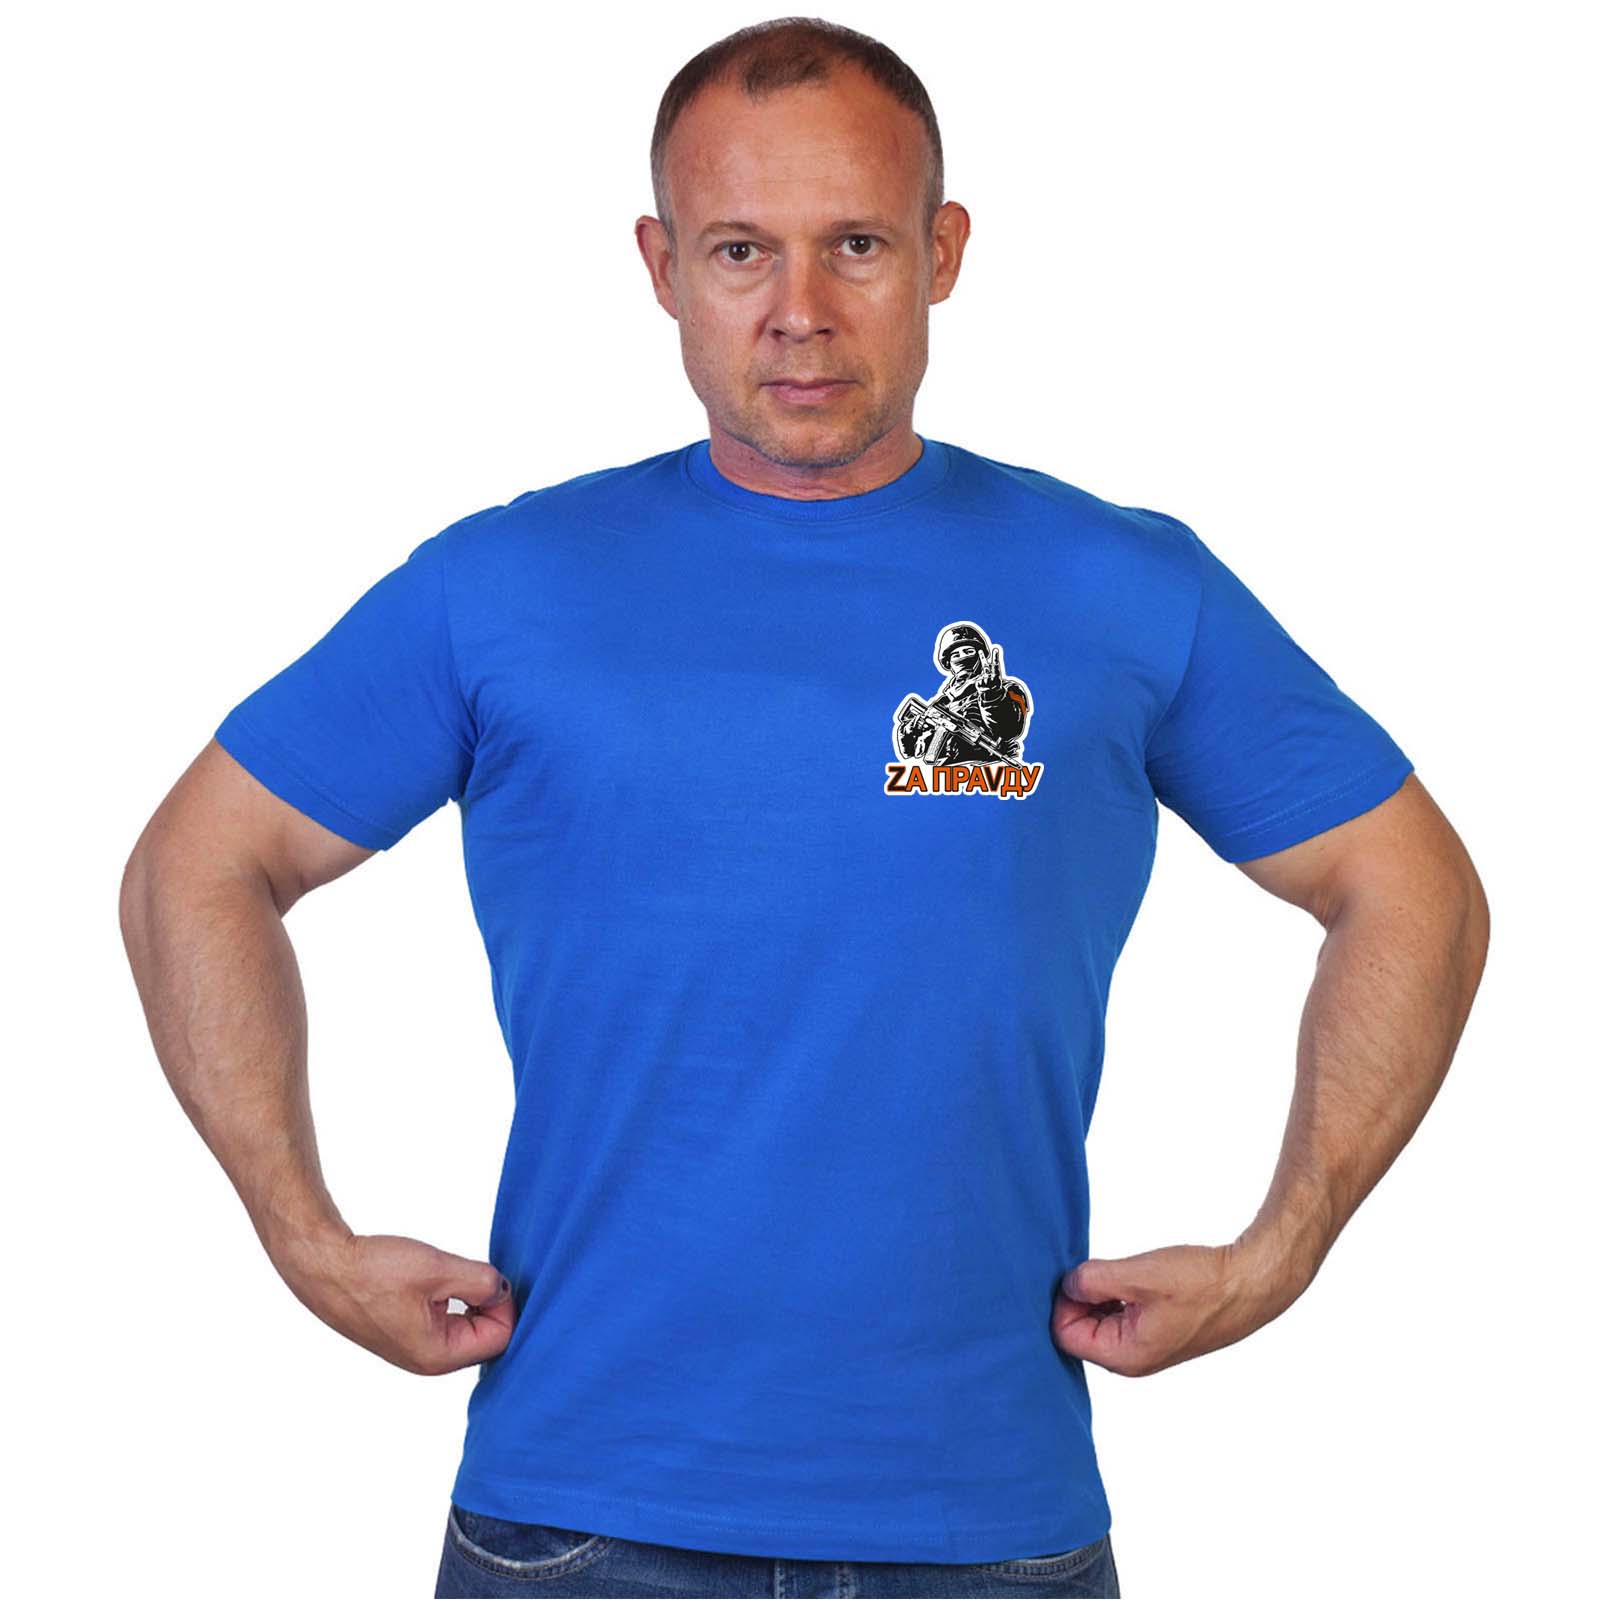 Васильковая футболка с термотрансфером "Zа праVду"